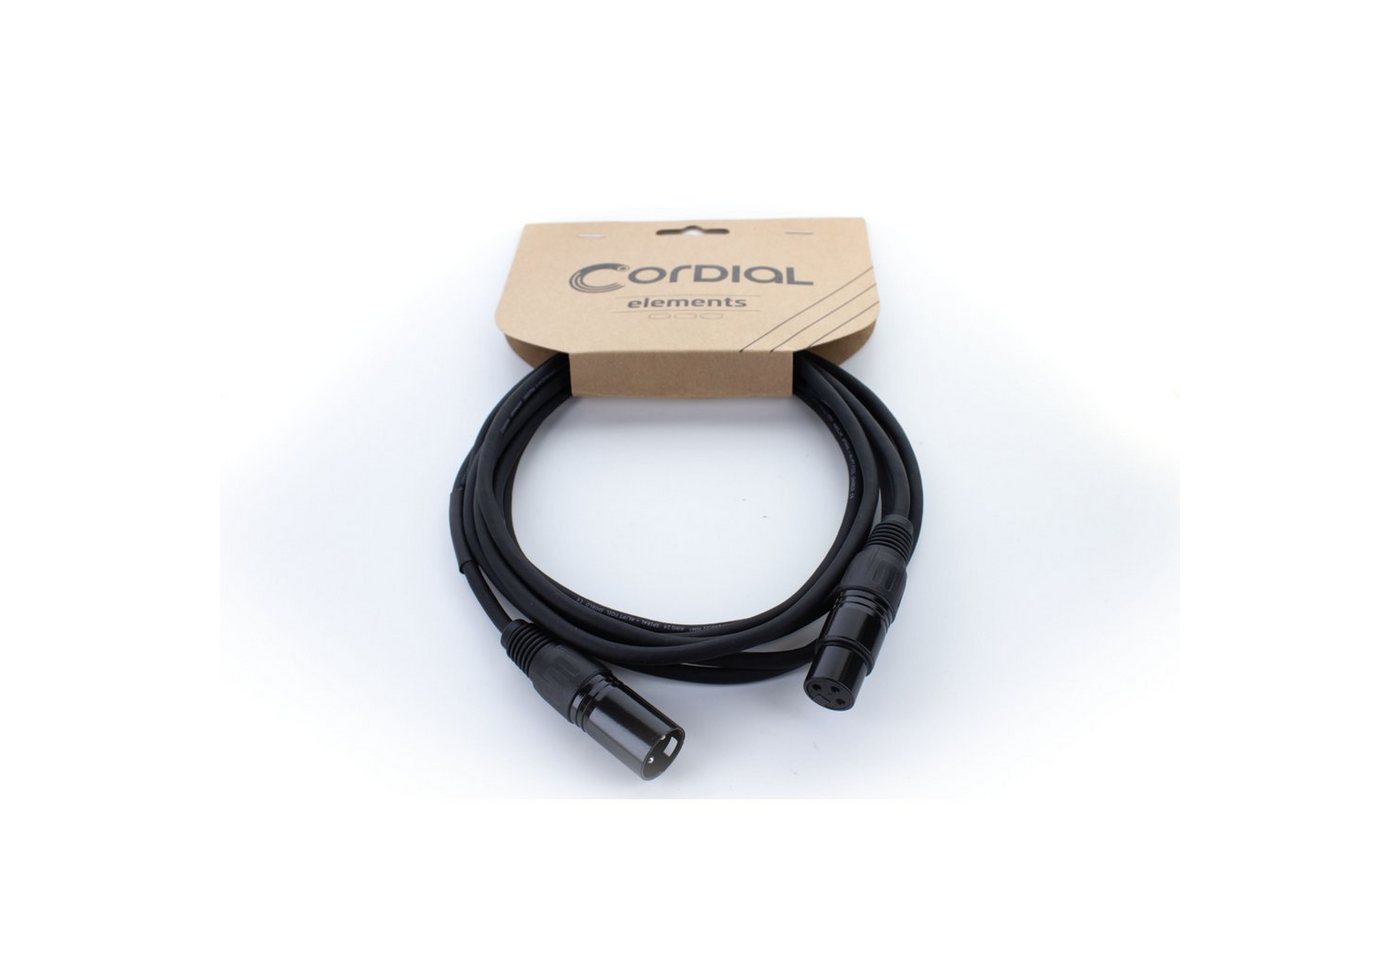 Cordial Lampen-Verbindungskabel, ED 3 FM DMX Kabel 3 m - Kabel von Cordial